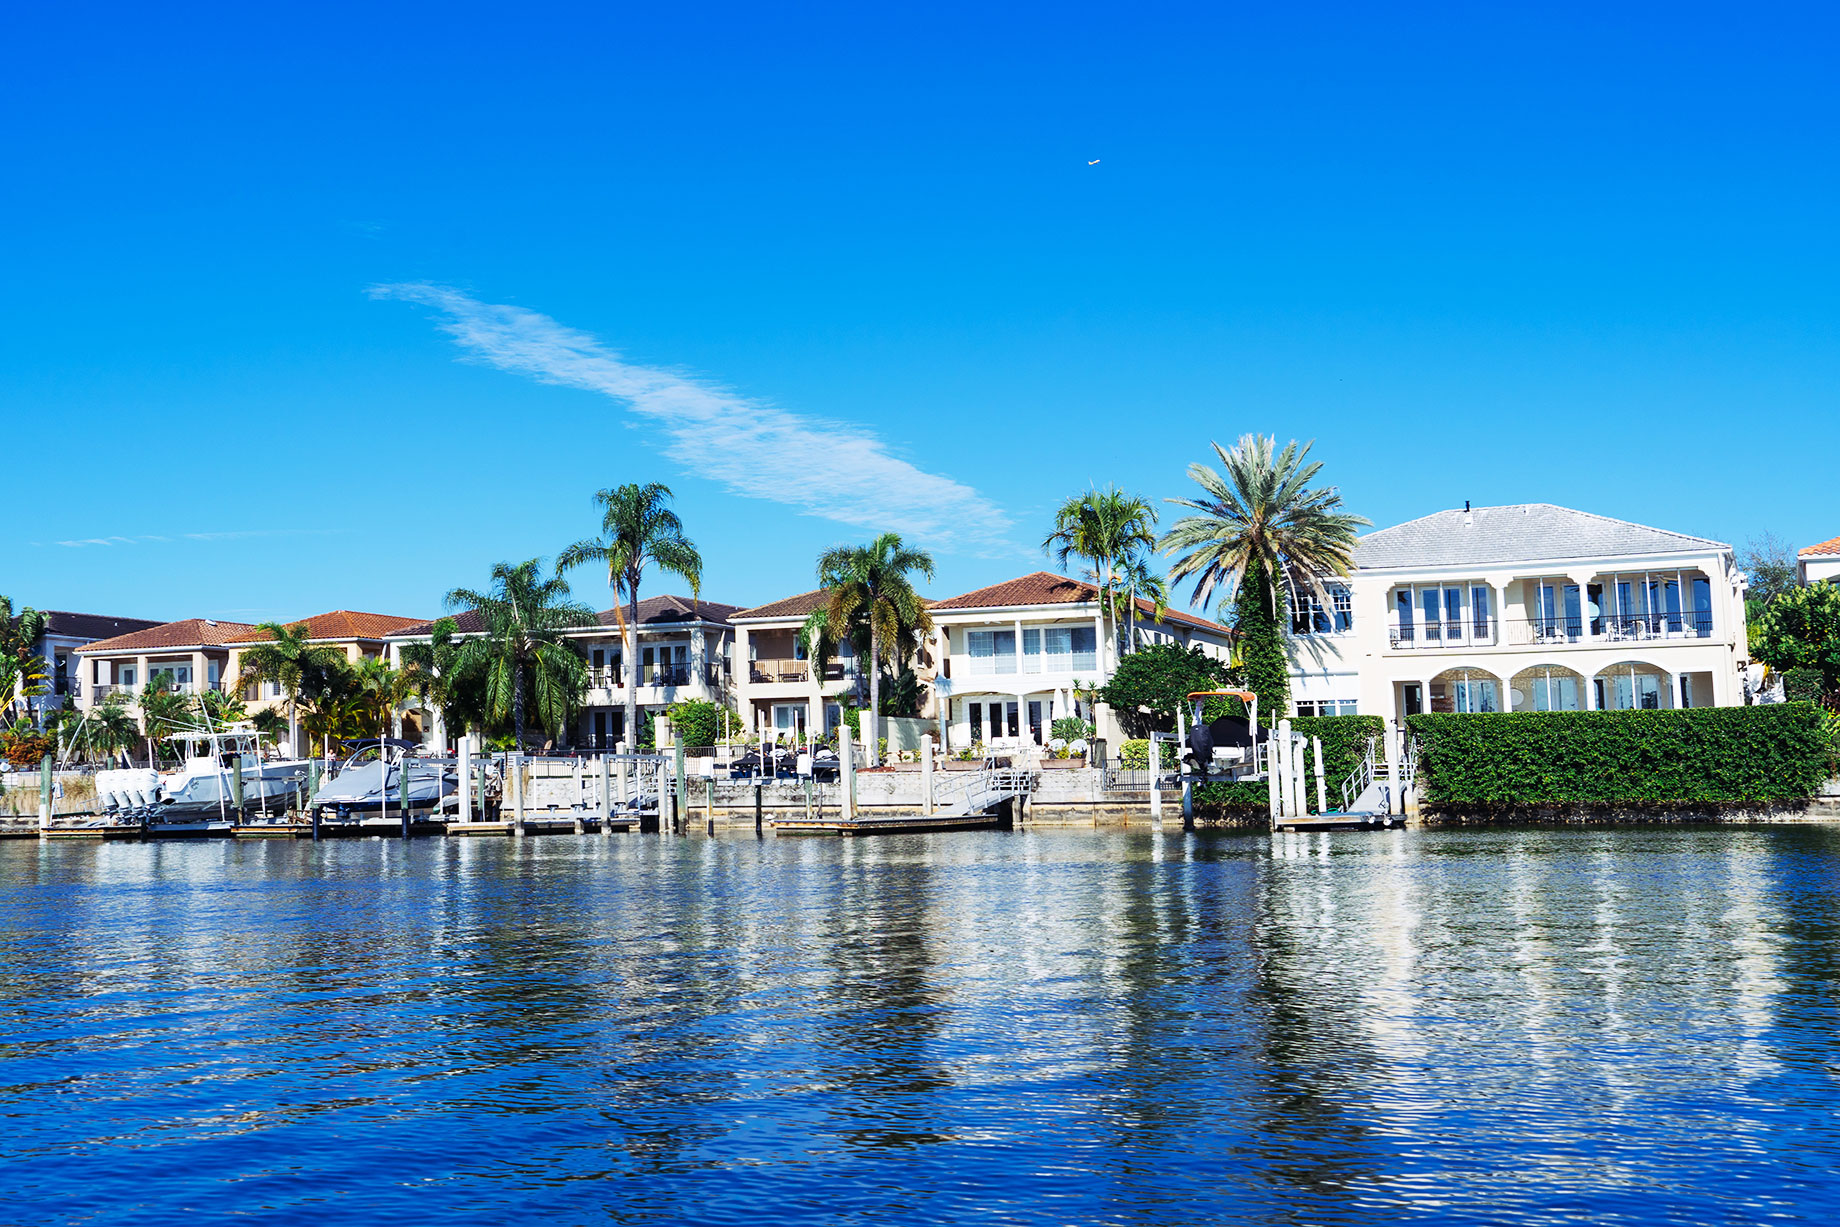 Hillsborough Bayshore Waterfront Houses - Tampa, Florida, USA